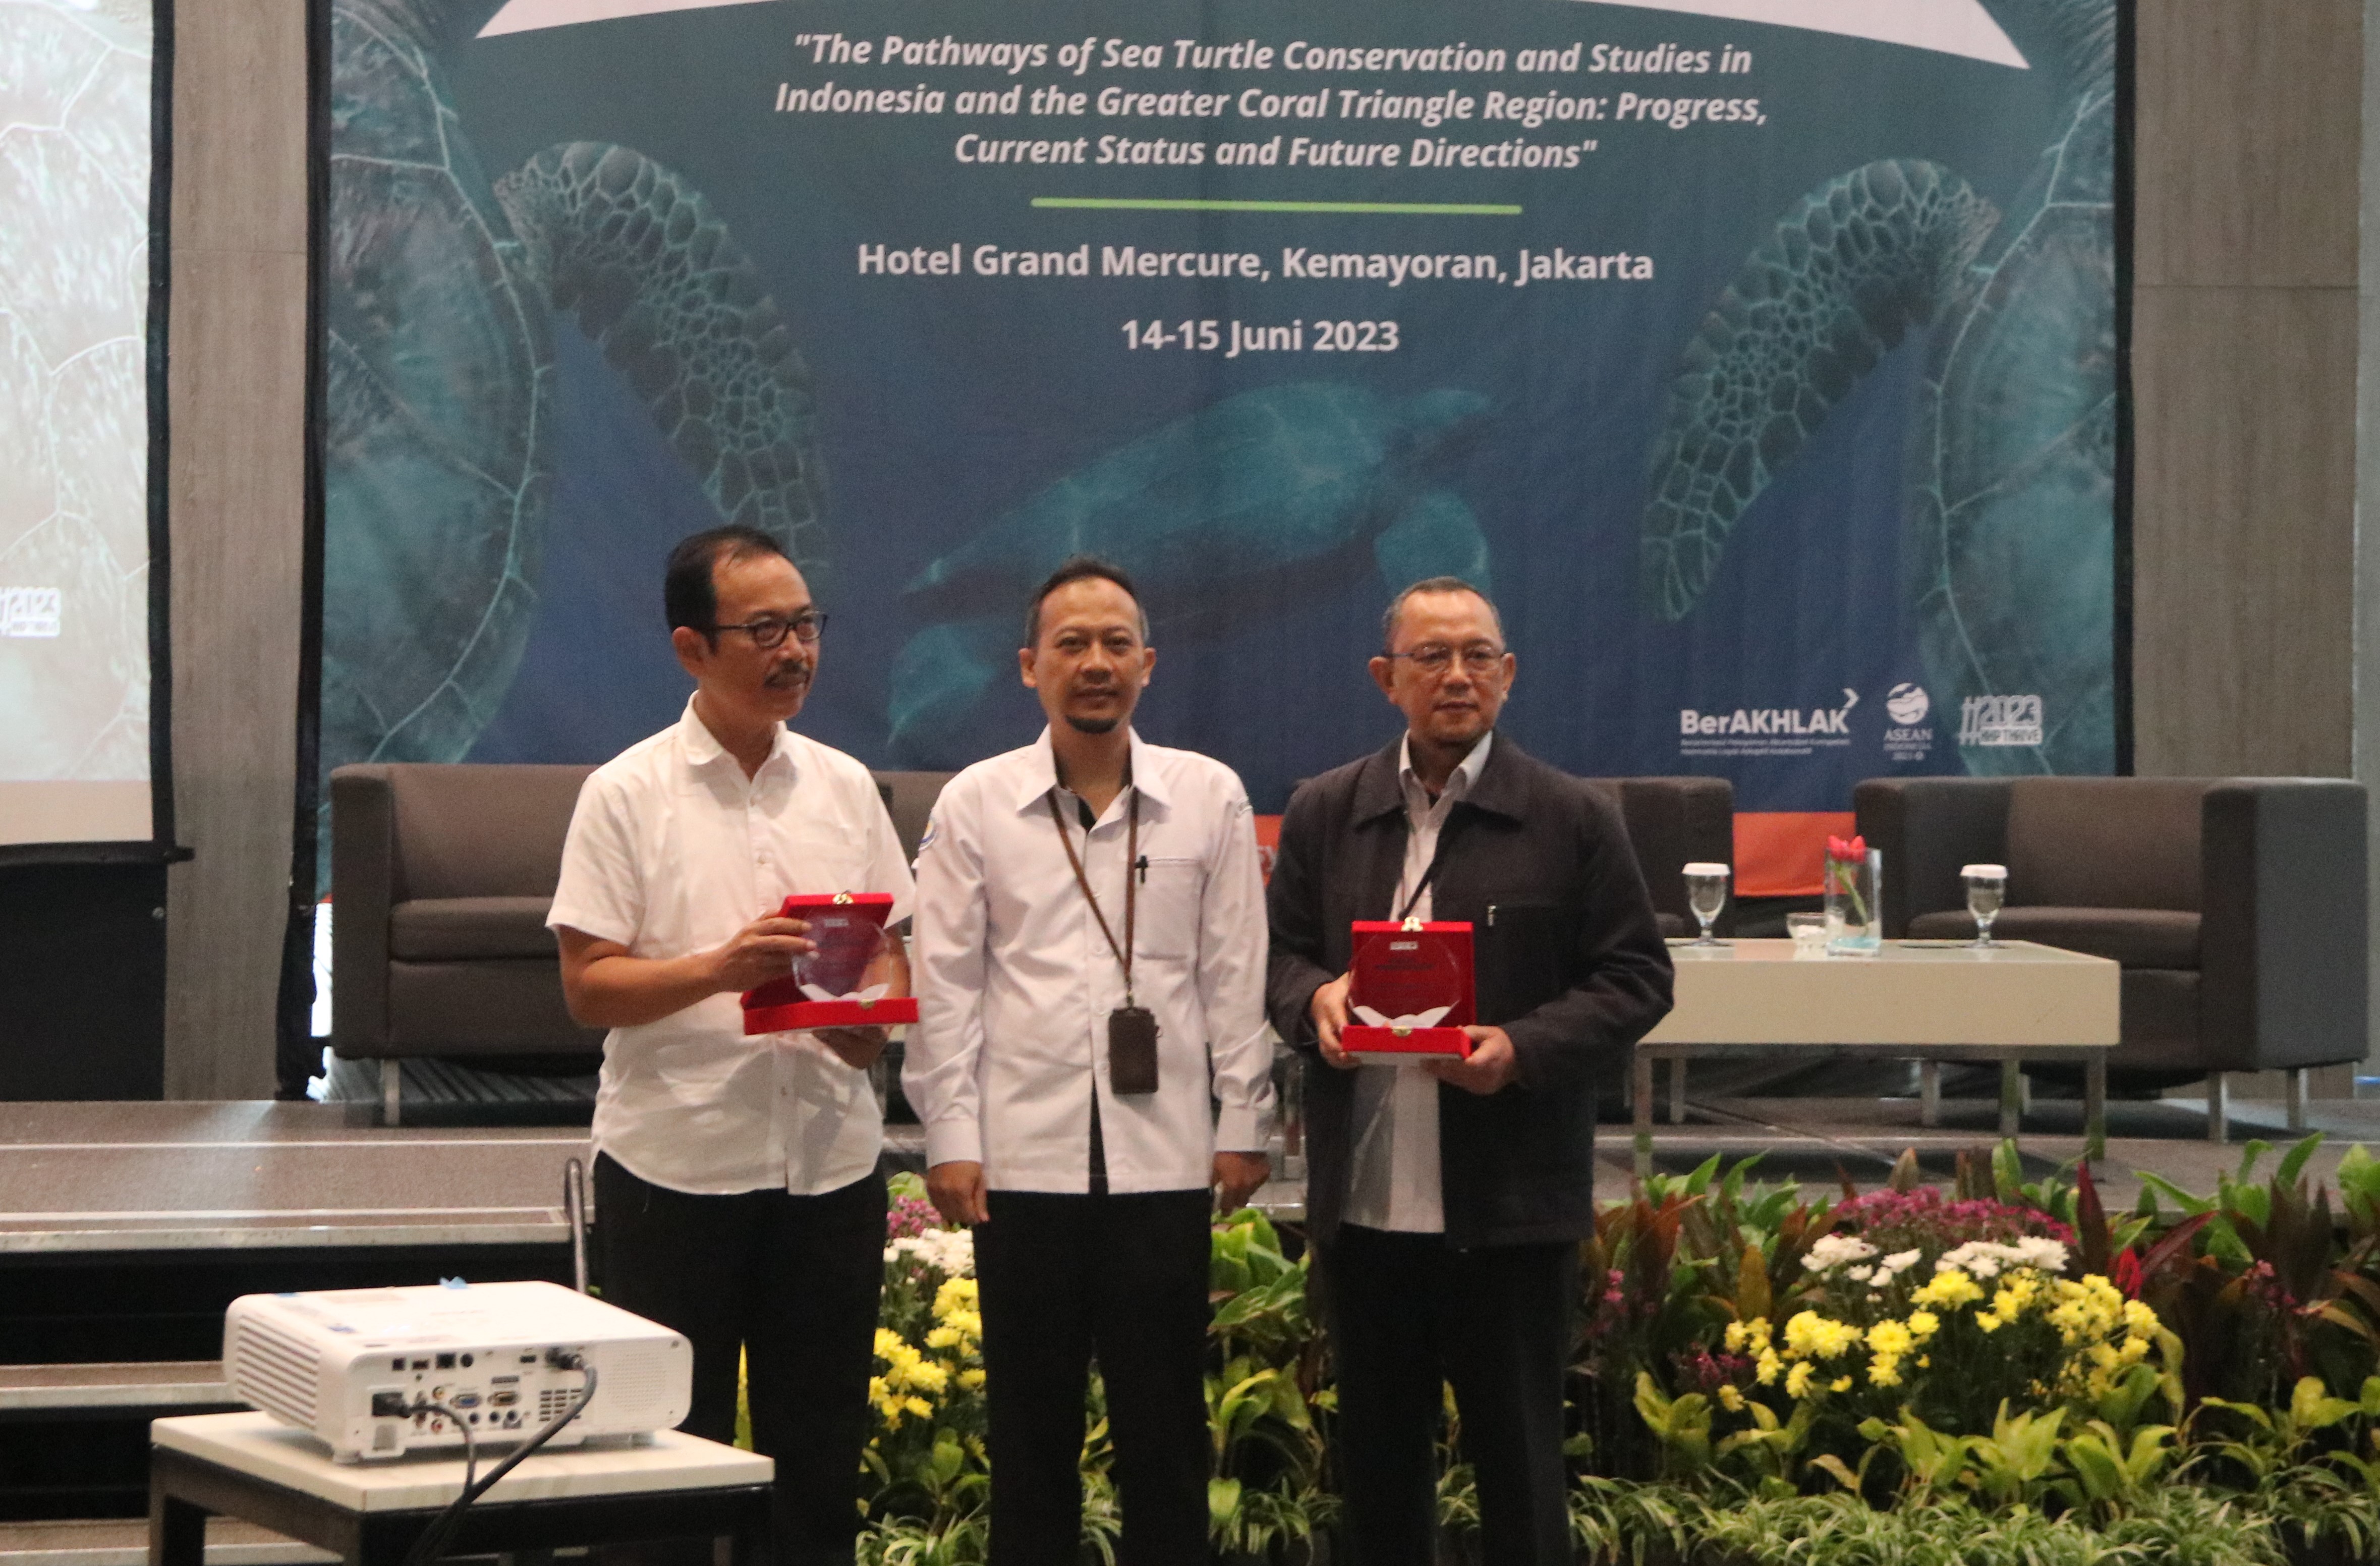 2023 Indonesia Sea Turtle Symposium and The Greater Coral Triangle Region, Jakarta 14-15 Juni 2023.